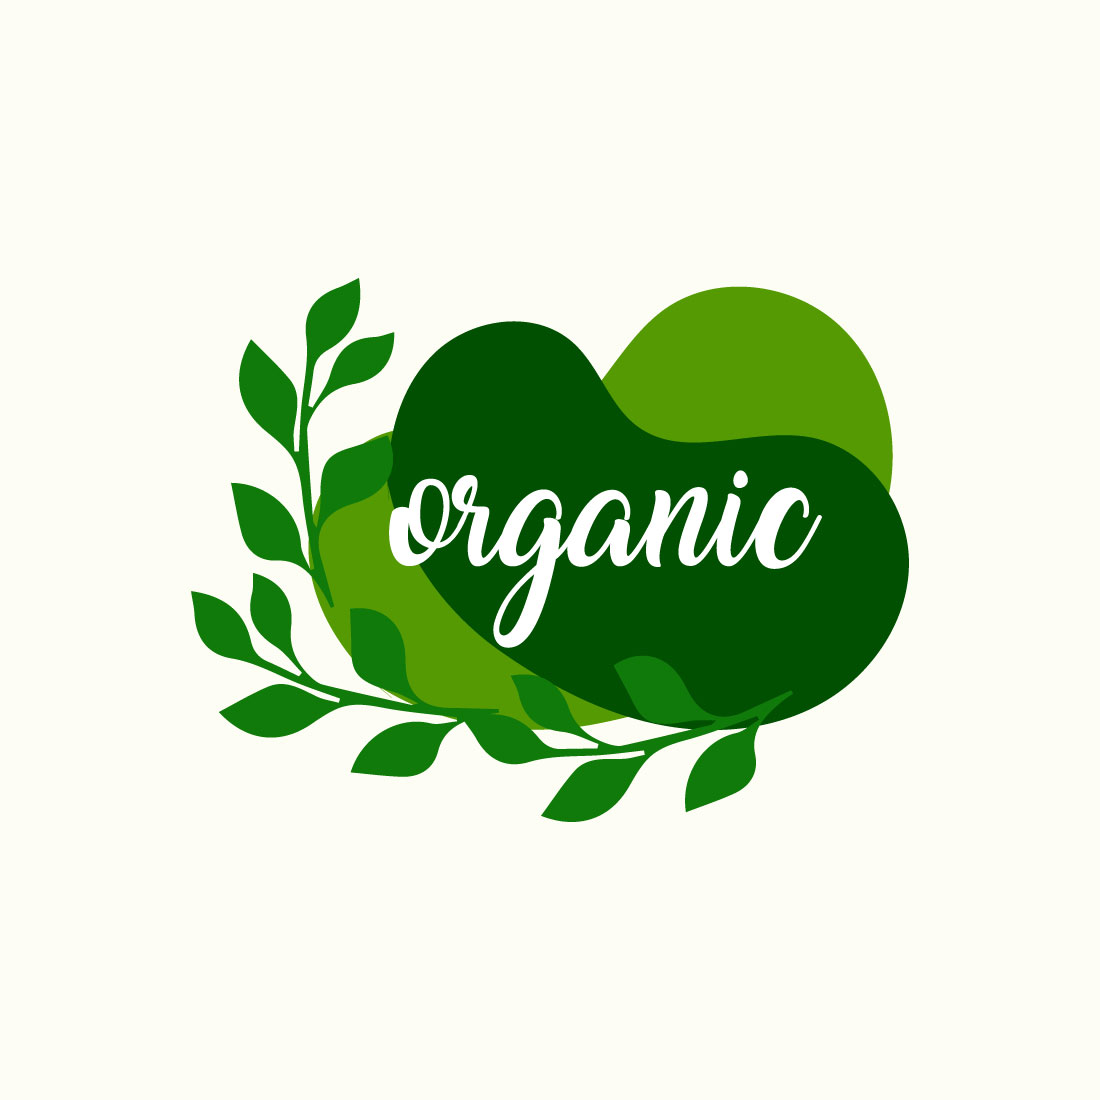 Free Certified organic logo cover image.